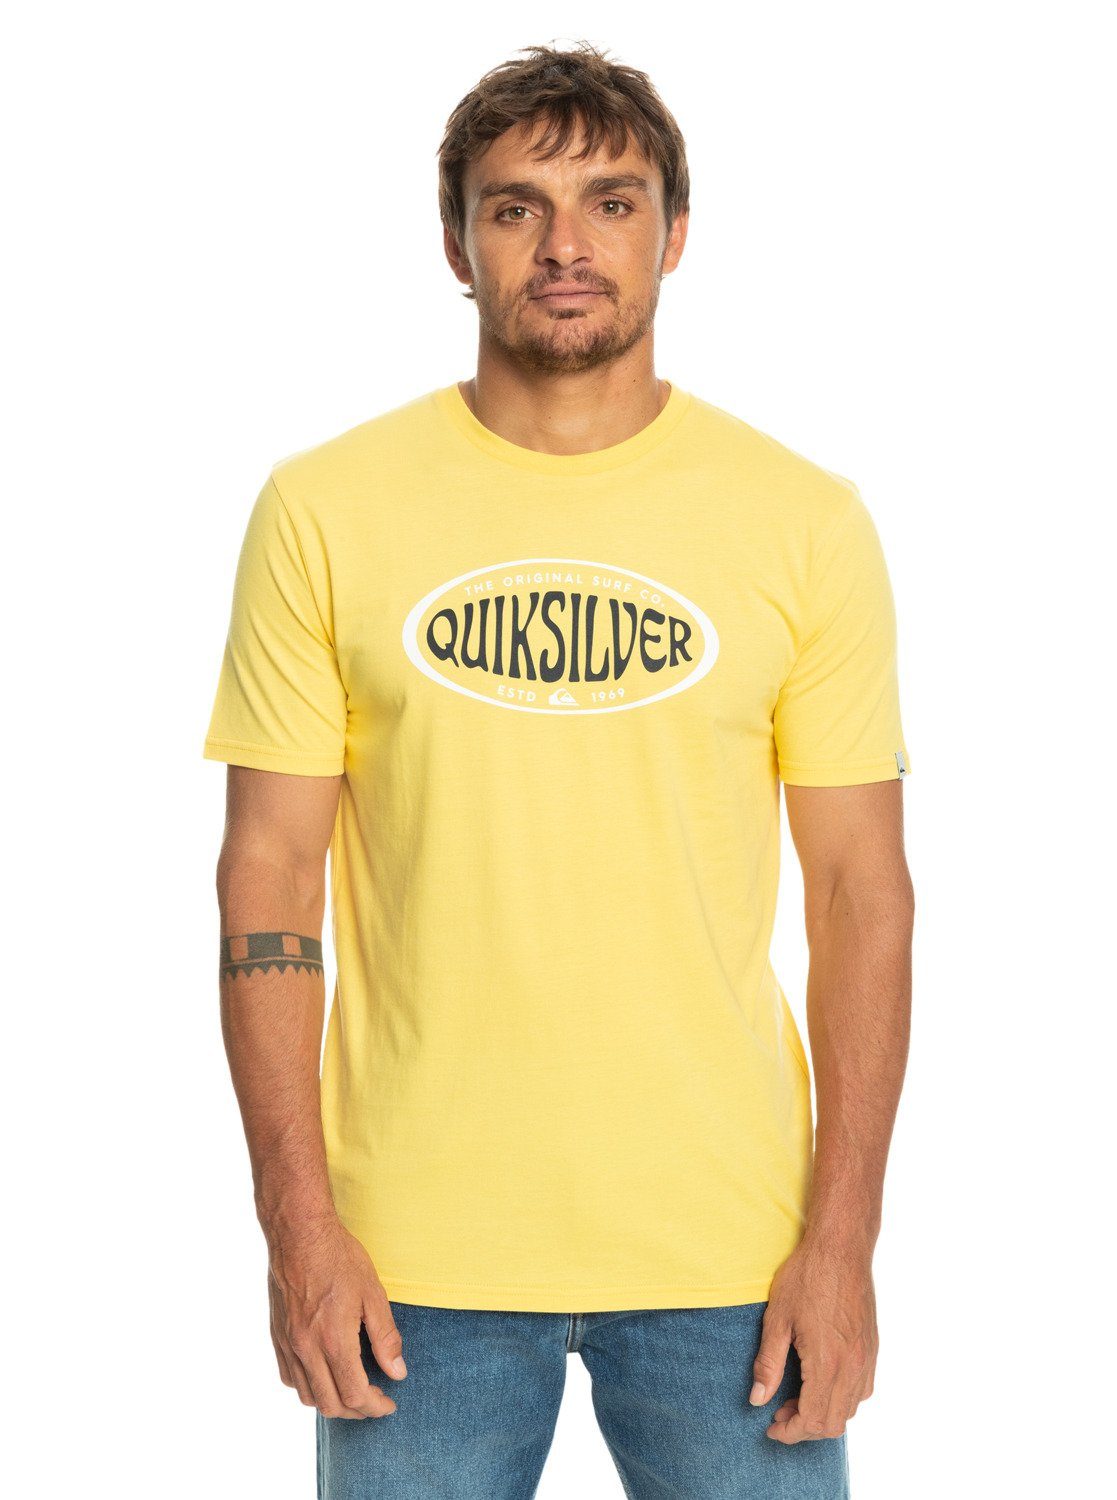 In Quiksilver Circles T-Shirt